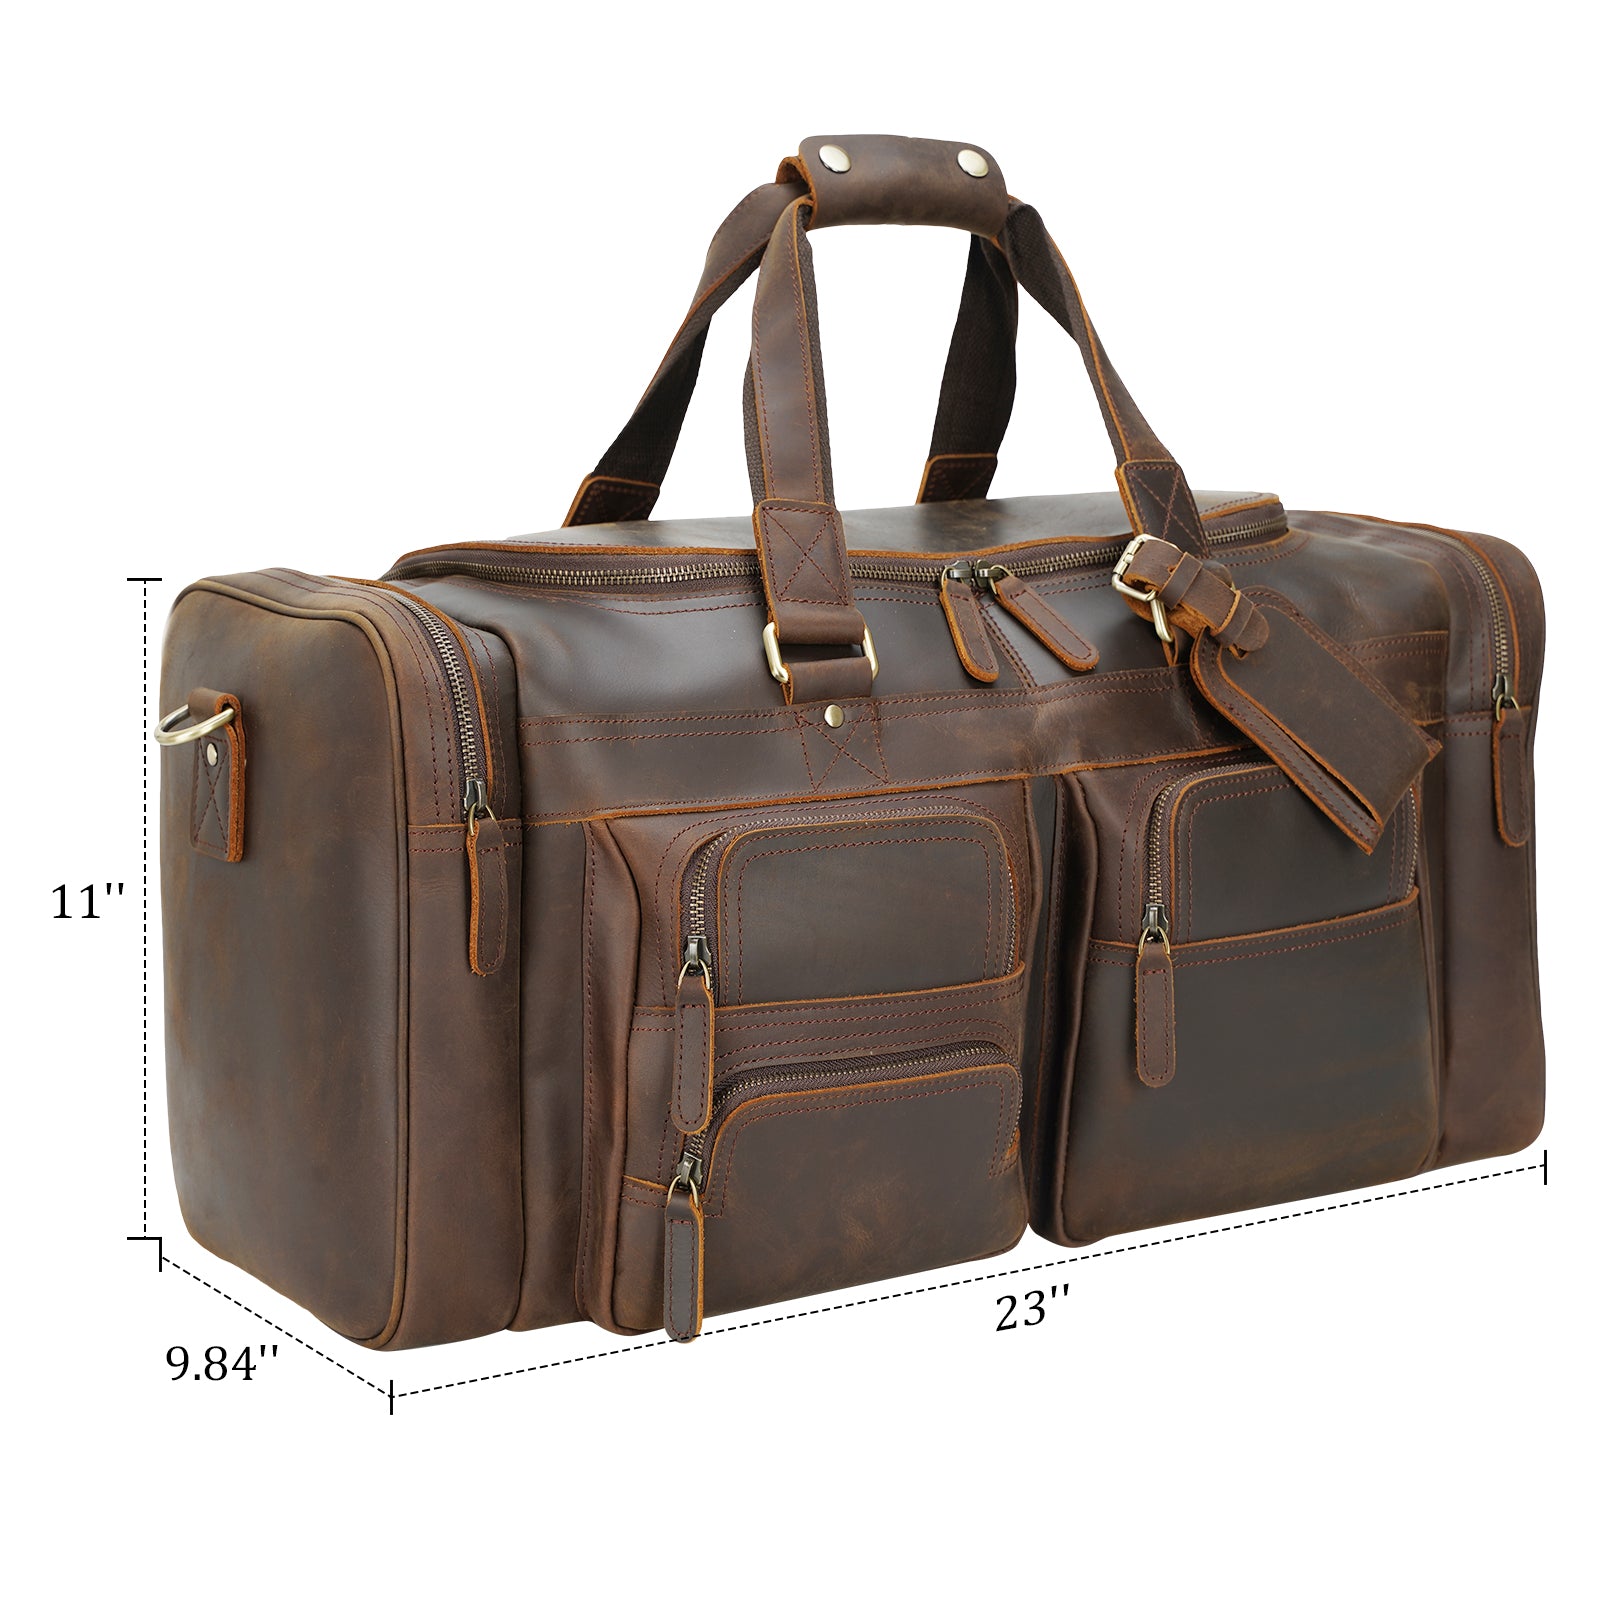 Polare 23" Full Grain Leather Duffel Weekender Travel Bag (Dimension)